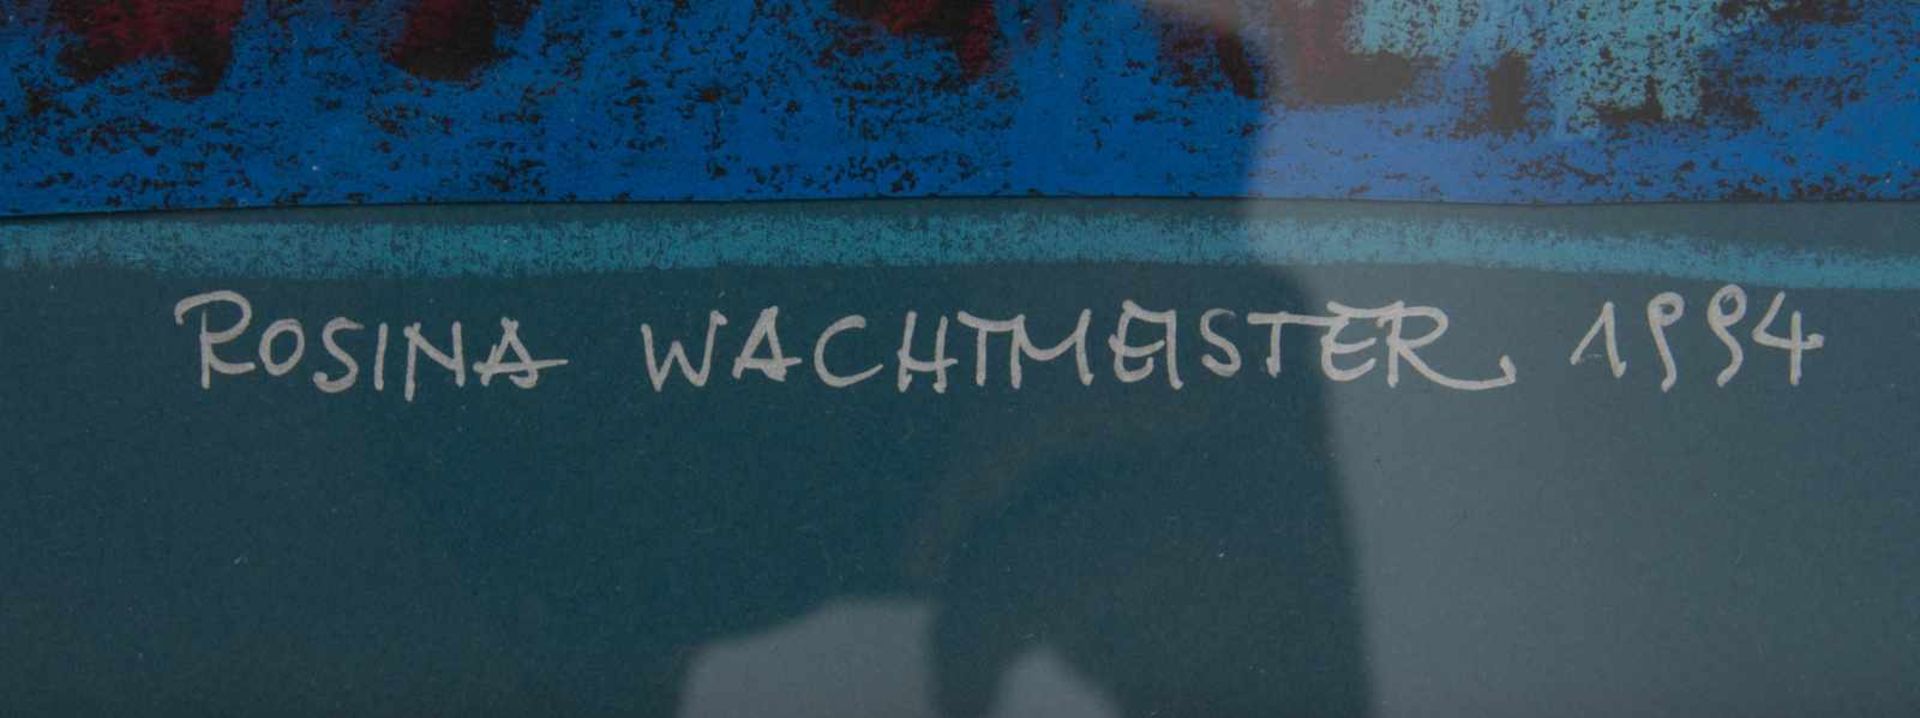 ROSINA WACHTMEISTER: FLÖTENSPIELER, Mischtechnik, hinter Glas, signiert und datiertGerahmte - Image 2 of 2